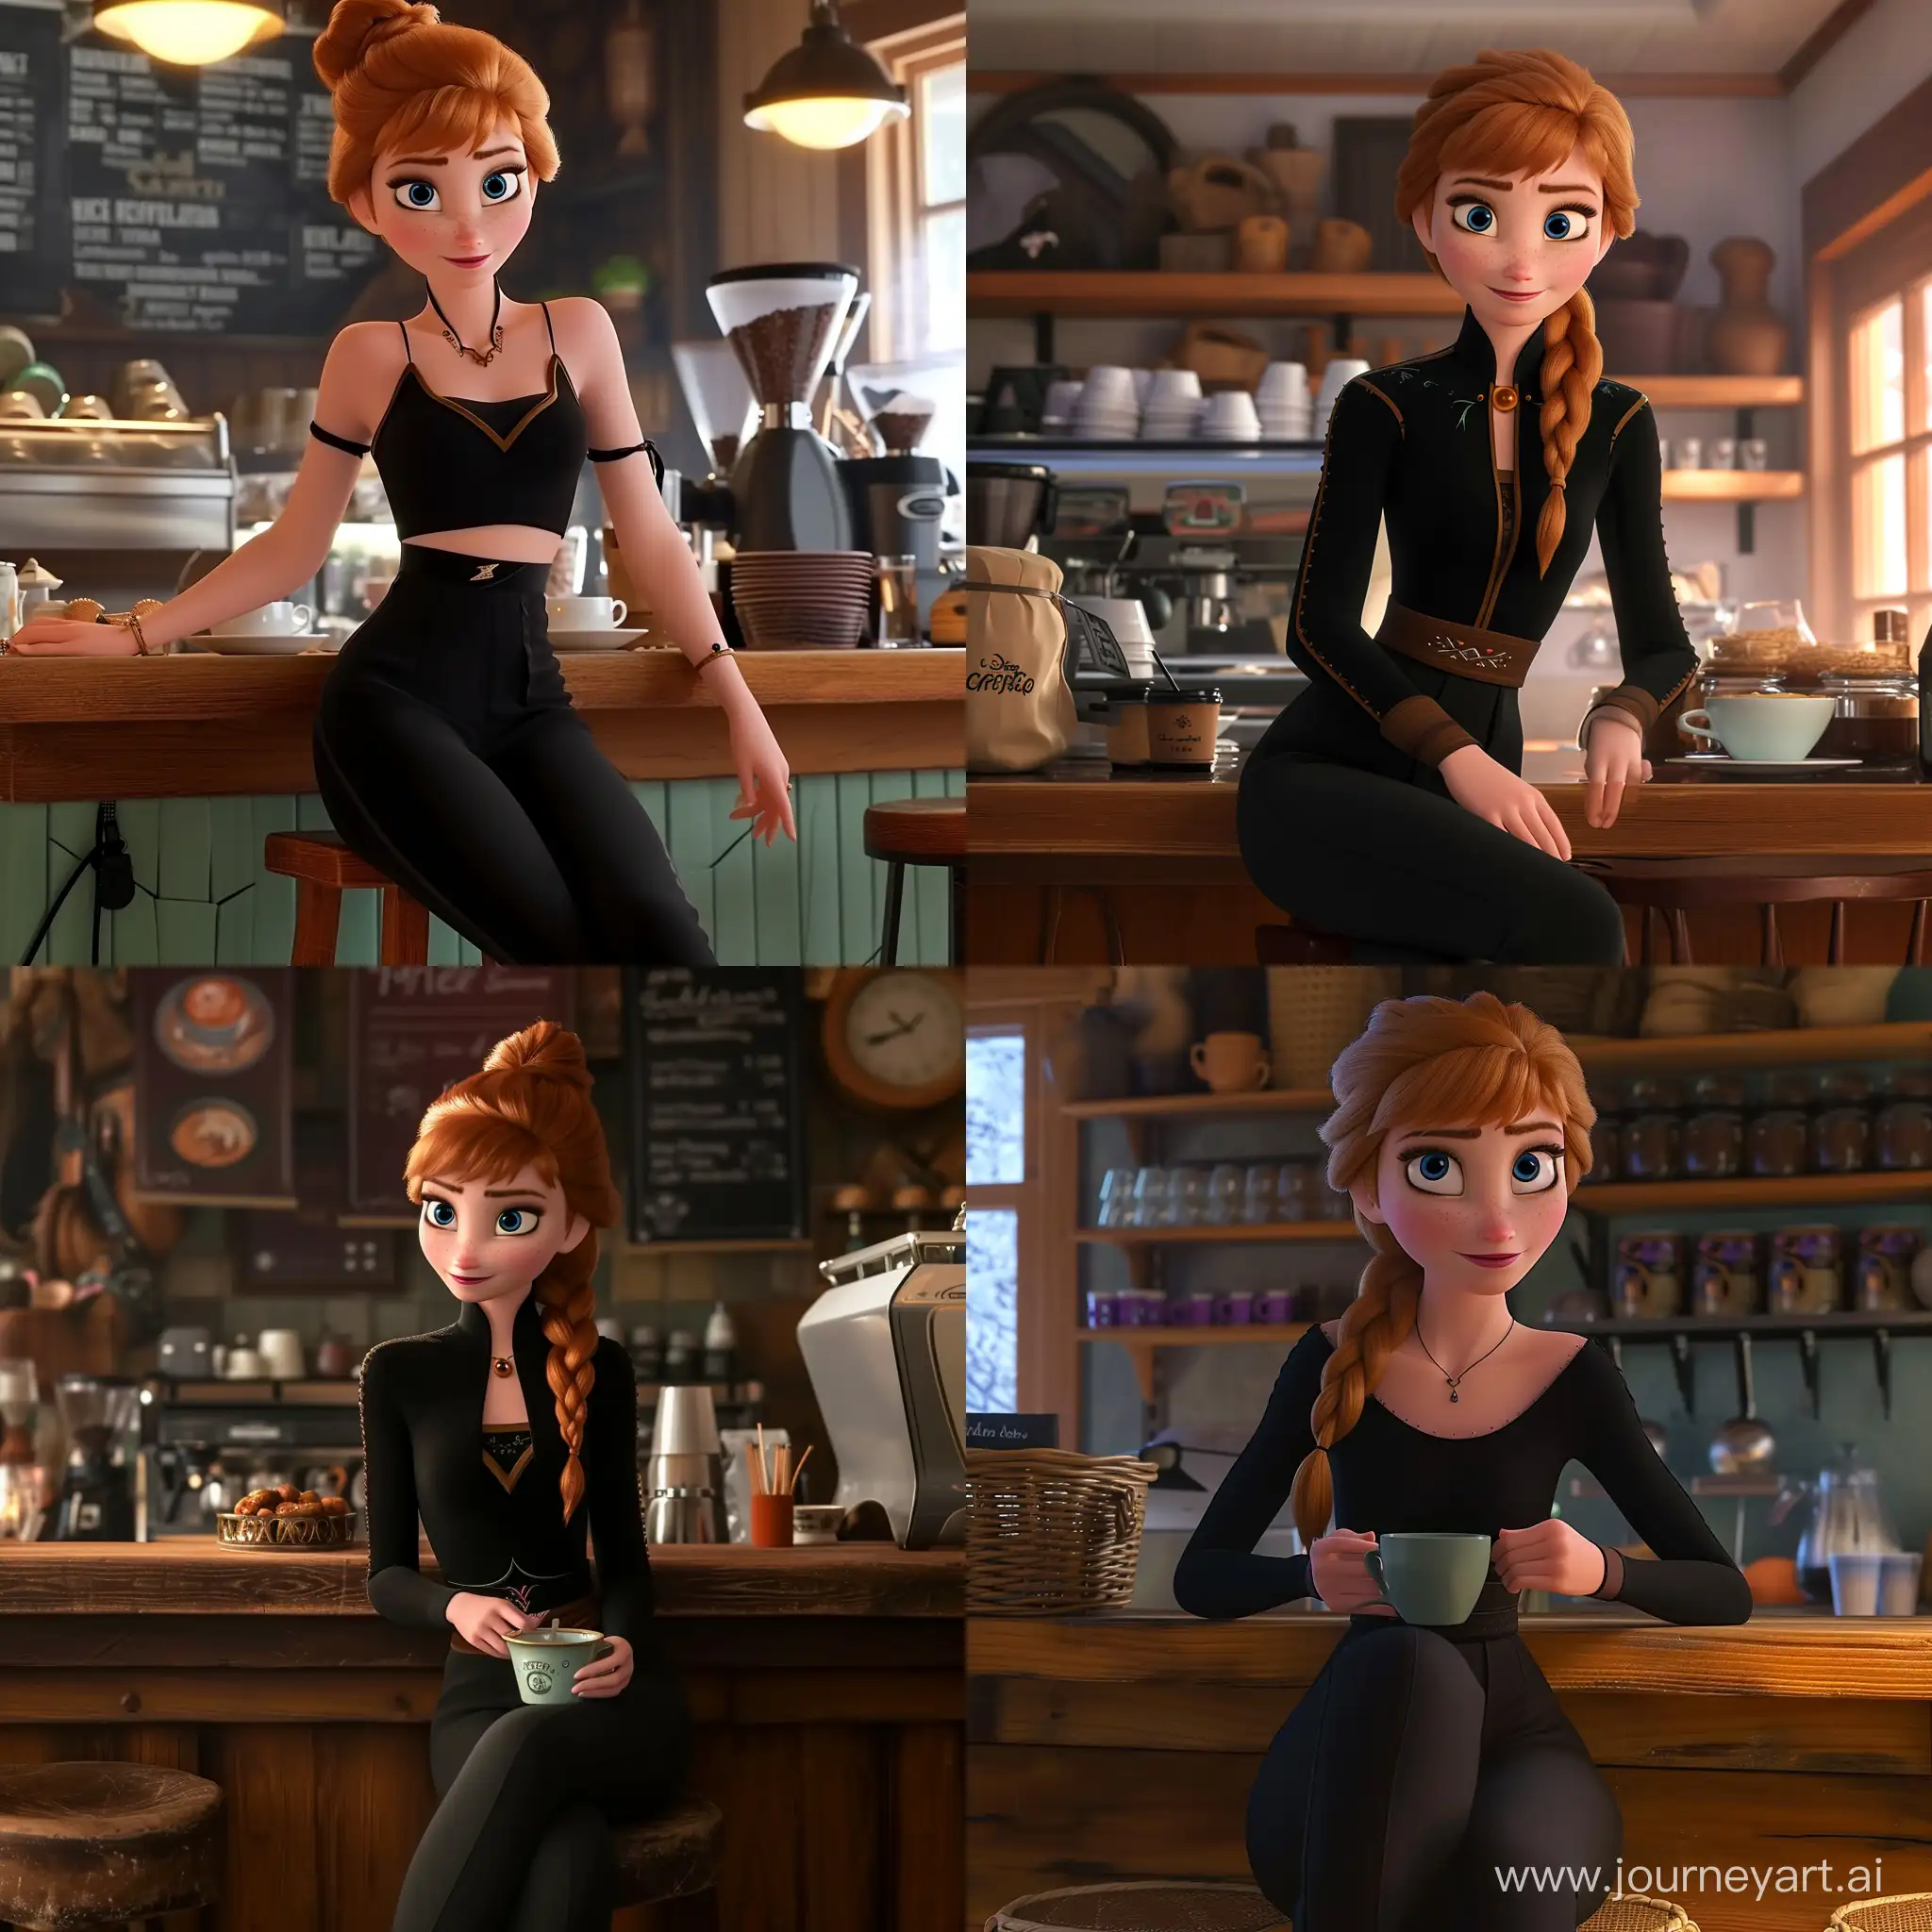 Elegant-25YearOld-Anna-from-Frozen-2-Enjoys-Coffee-Shop-Serenity